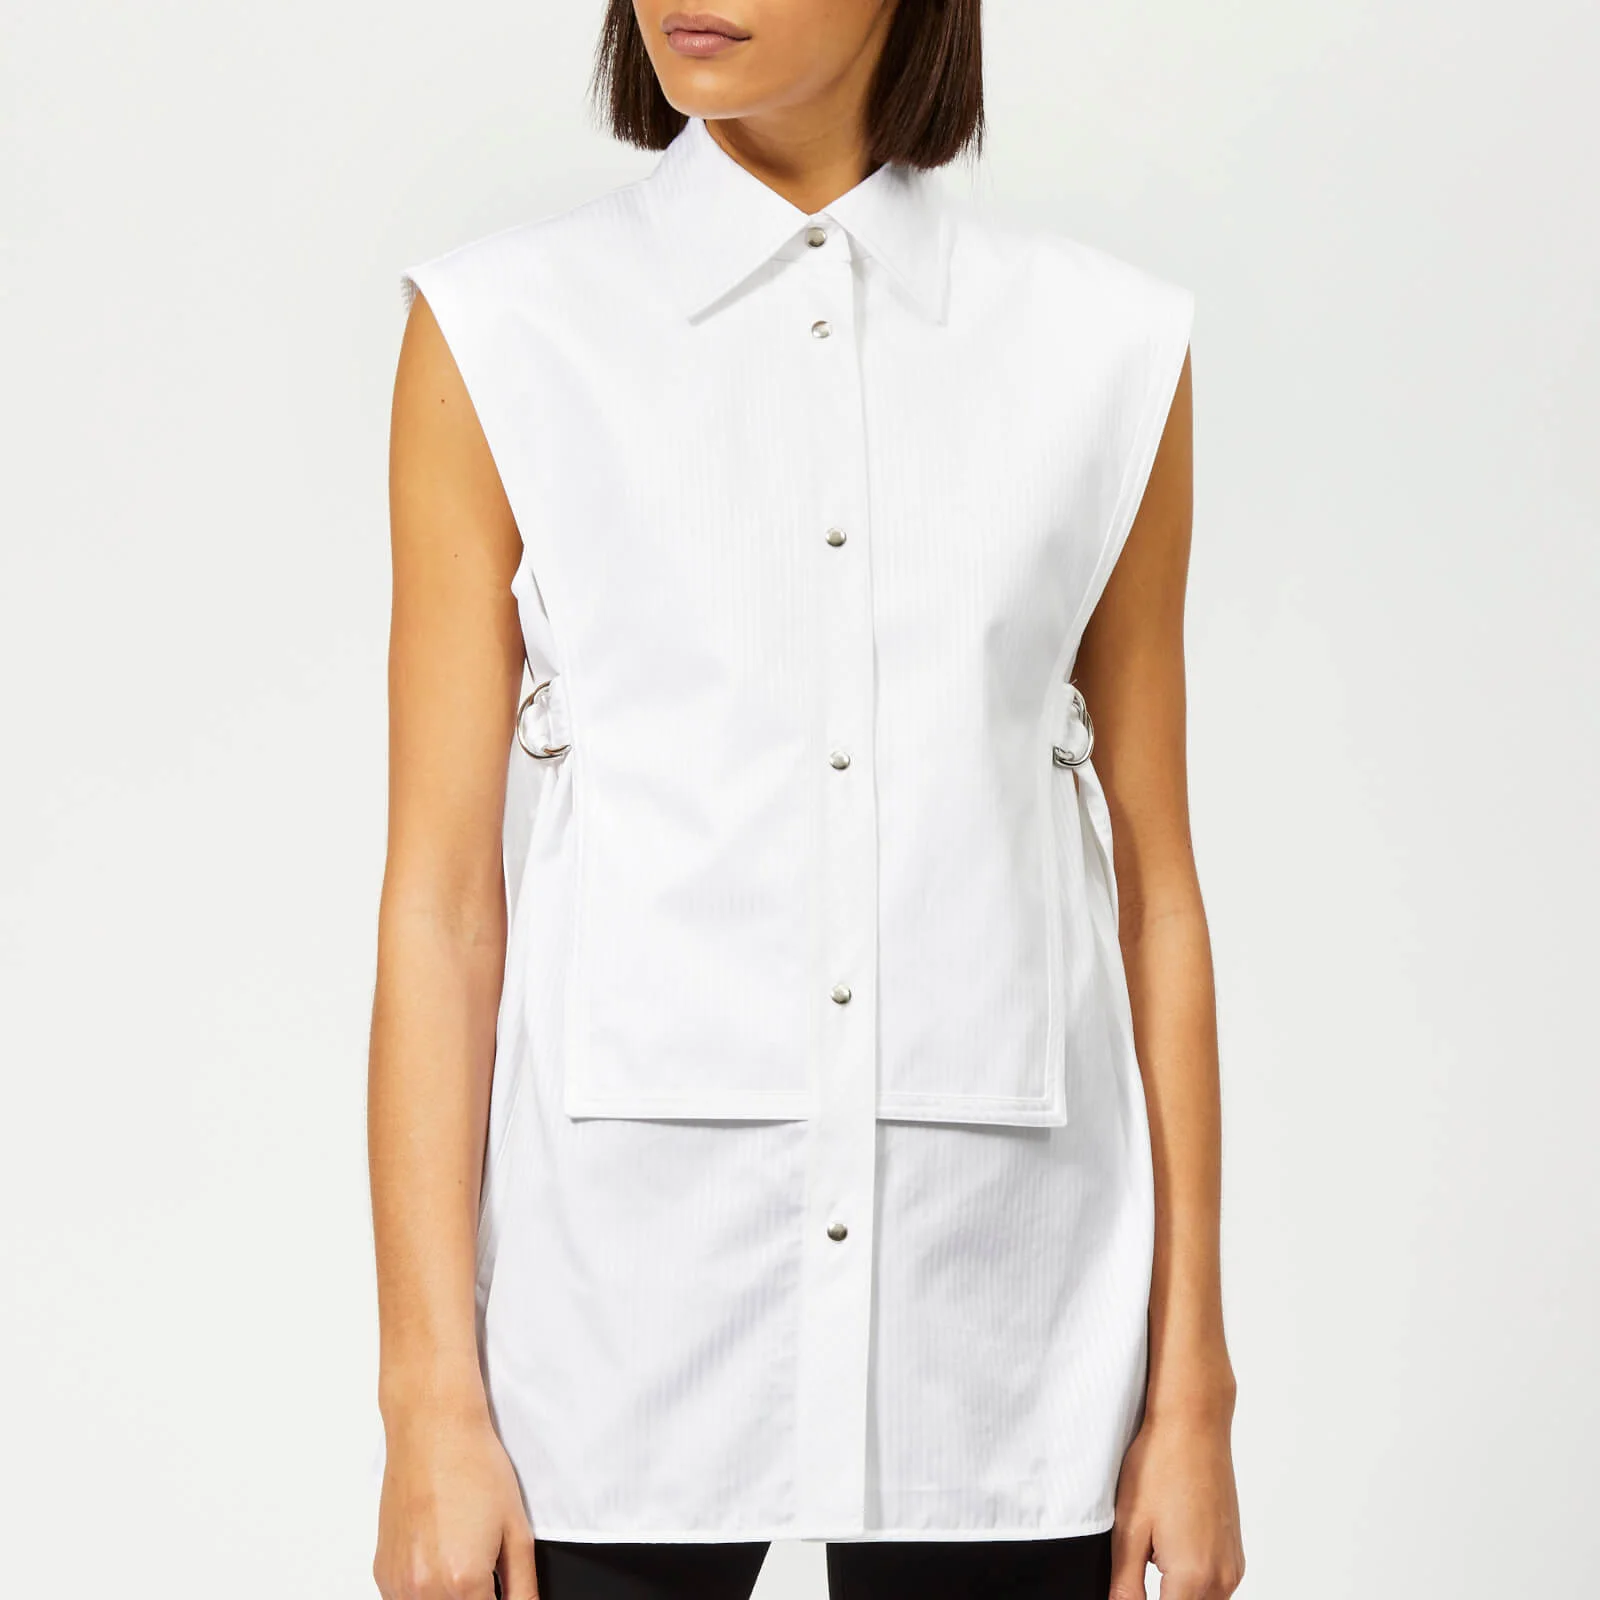 Helmut Lang Women's Sleeveless Bib Shirt - White Satin Image 1